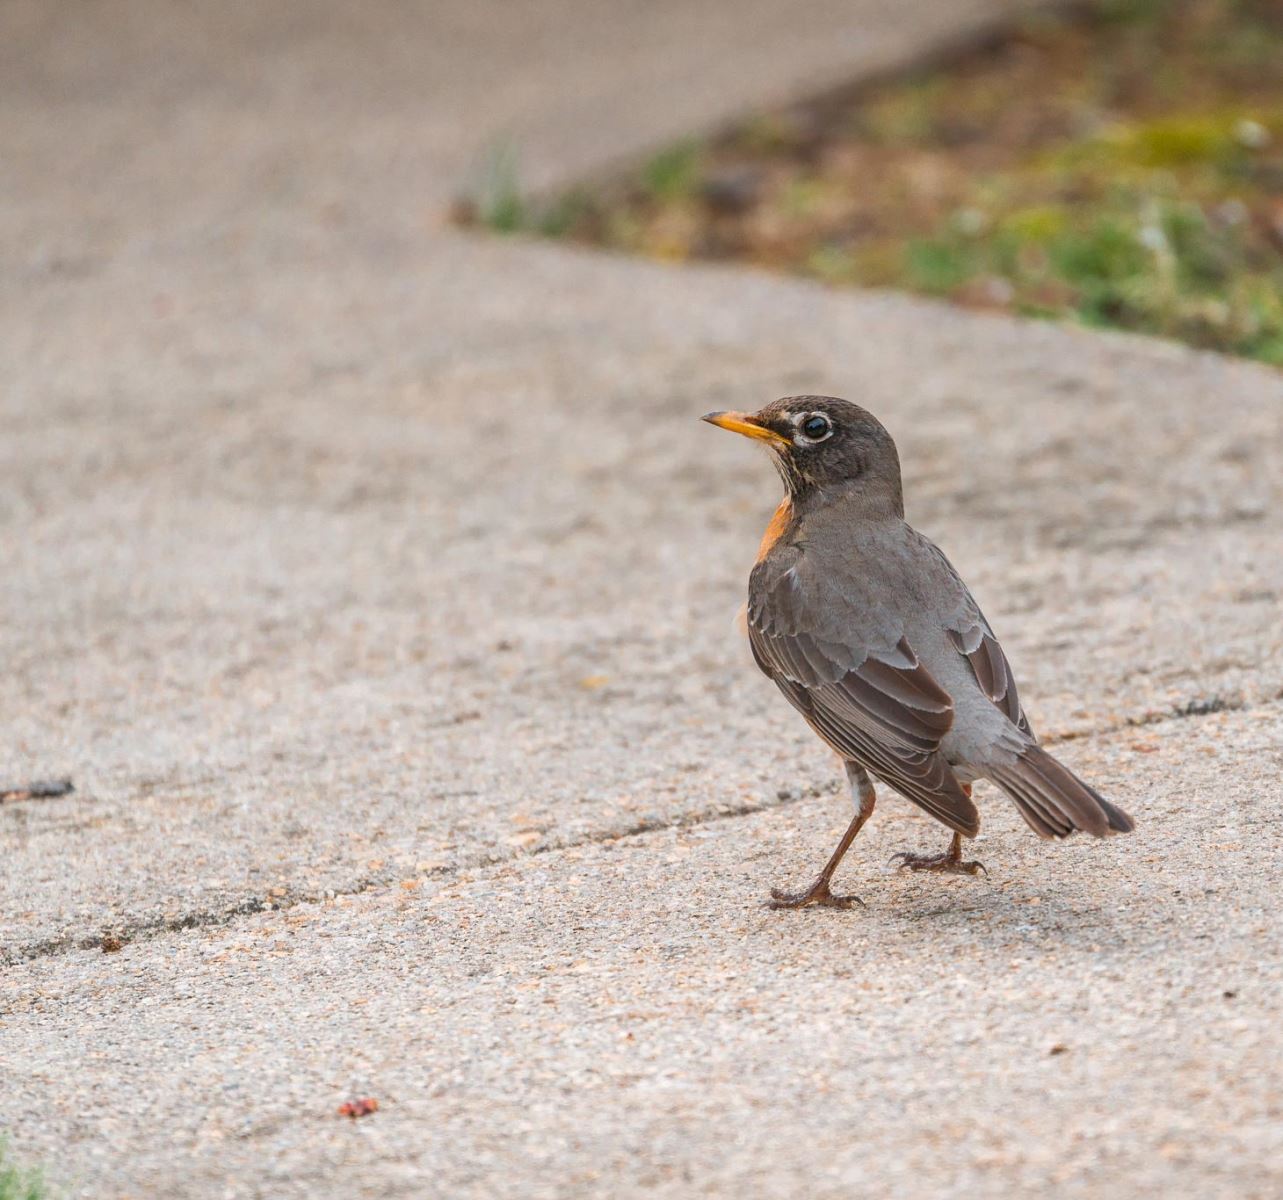 robin on sidewalk - photo credit: John Brighenti